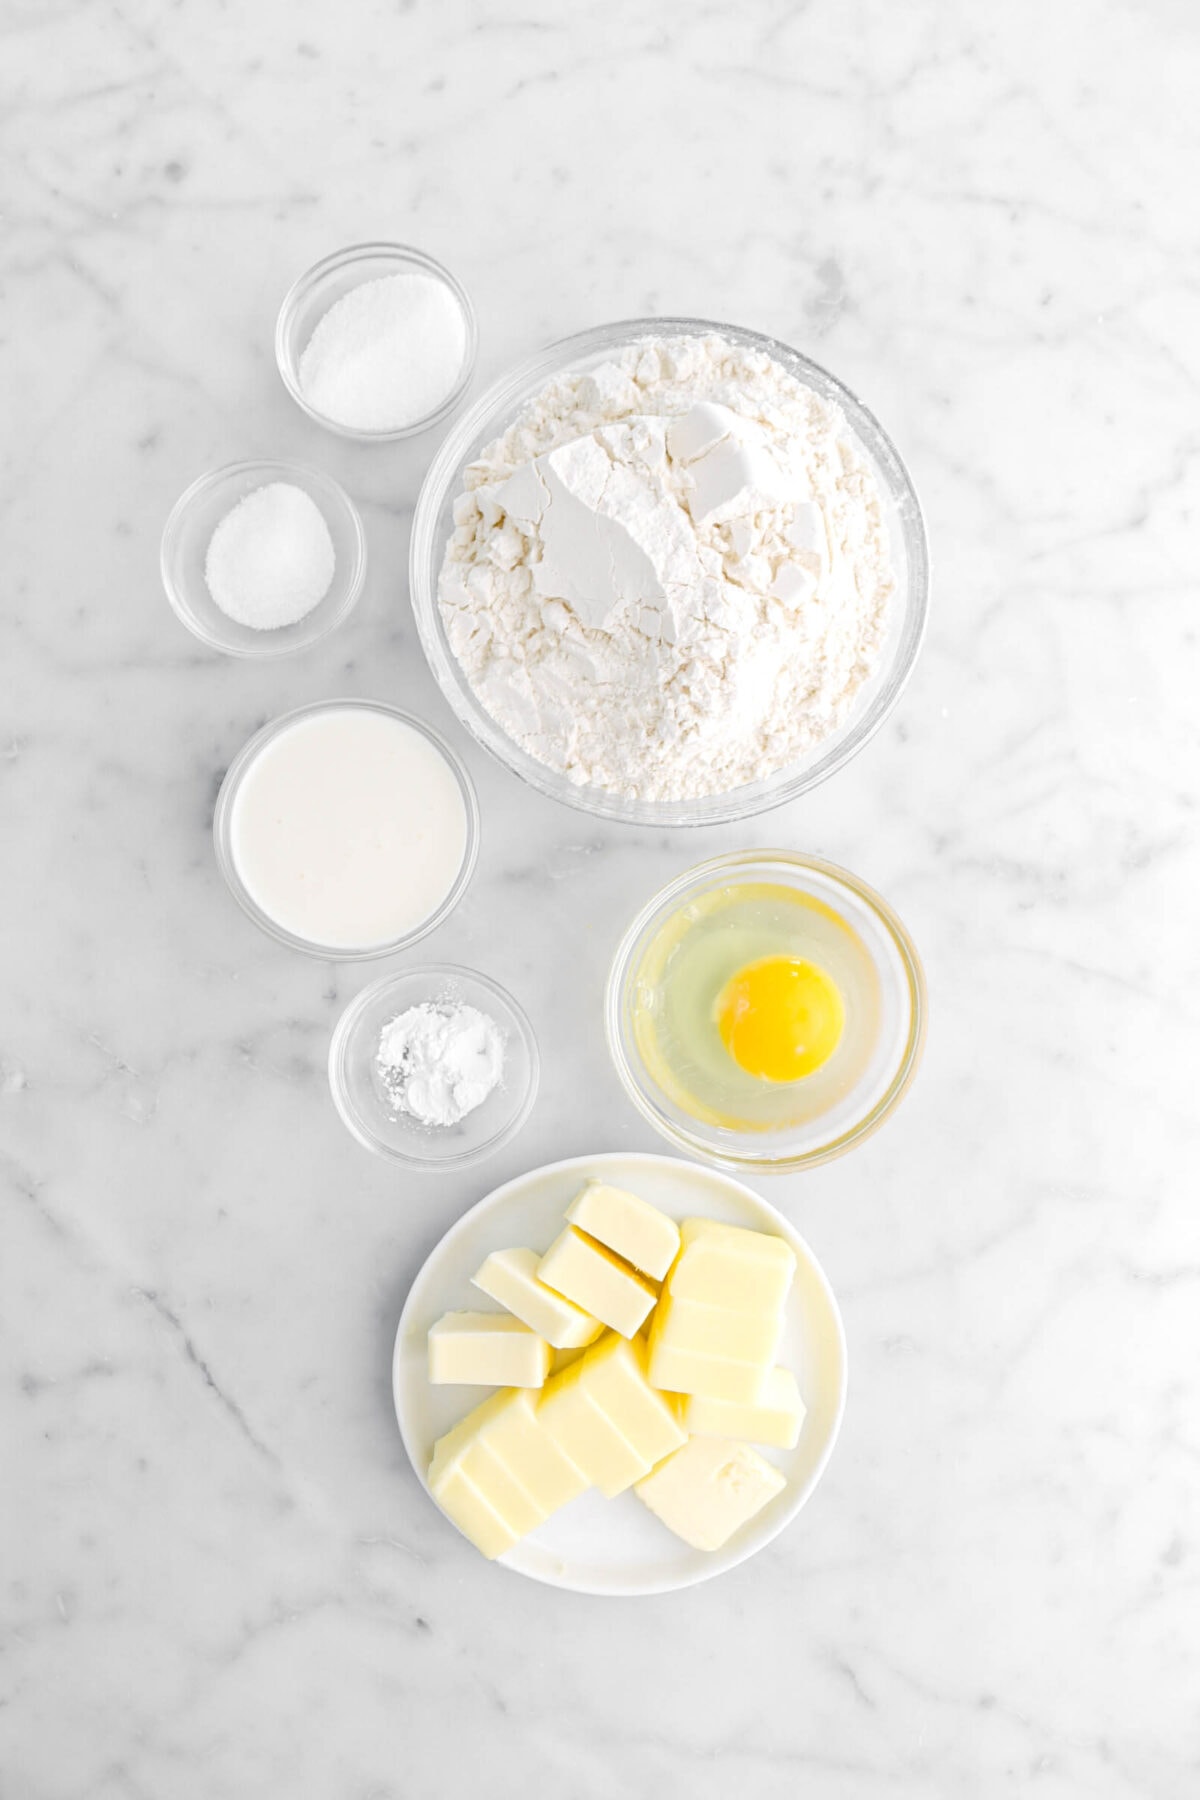 sugar, salt, milk, flour, baking powder, egg, and butter on marble surface.